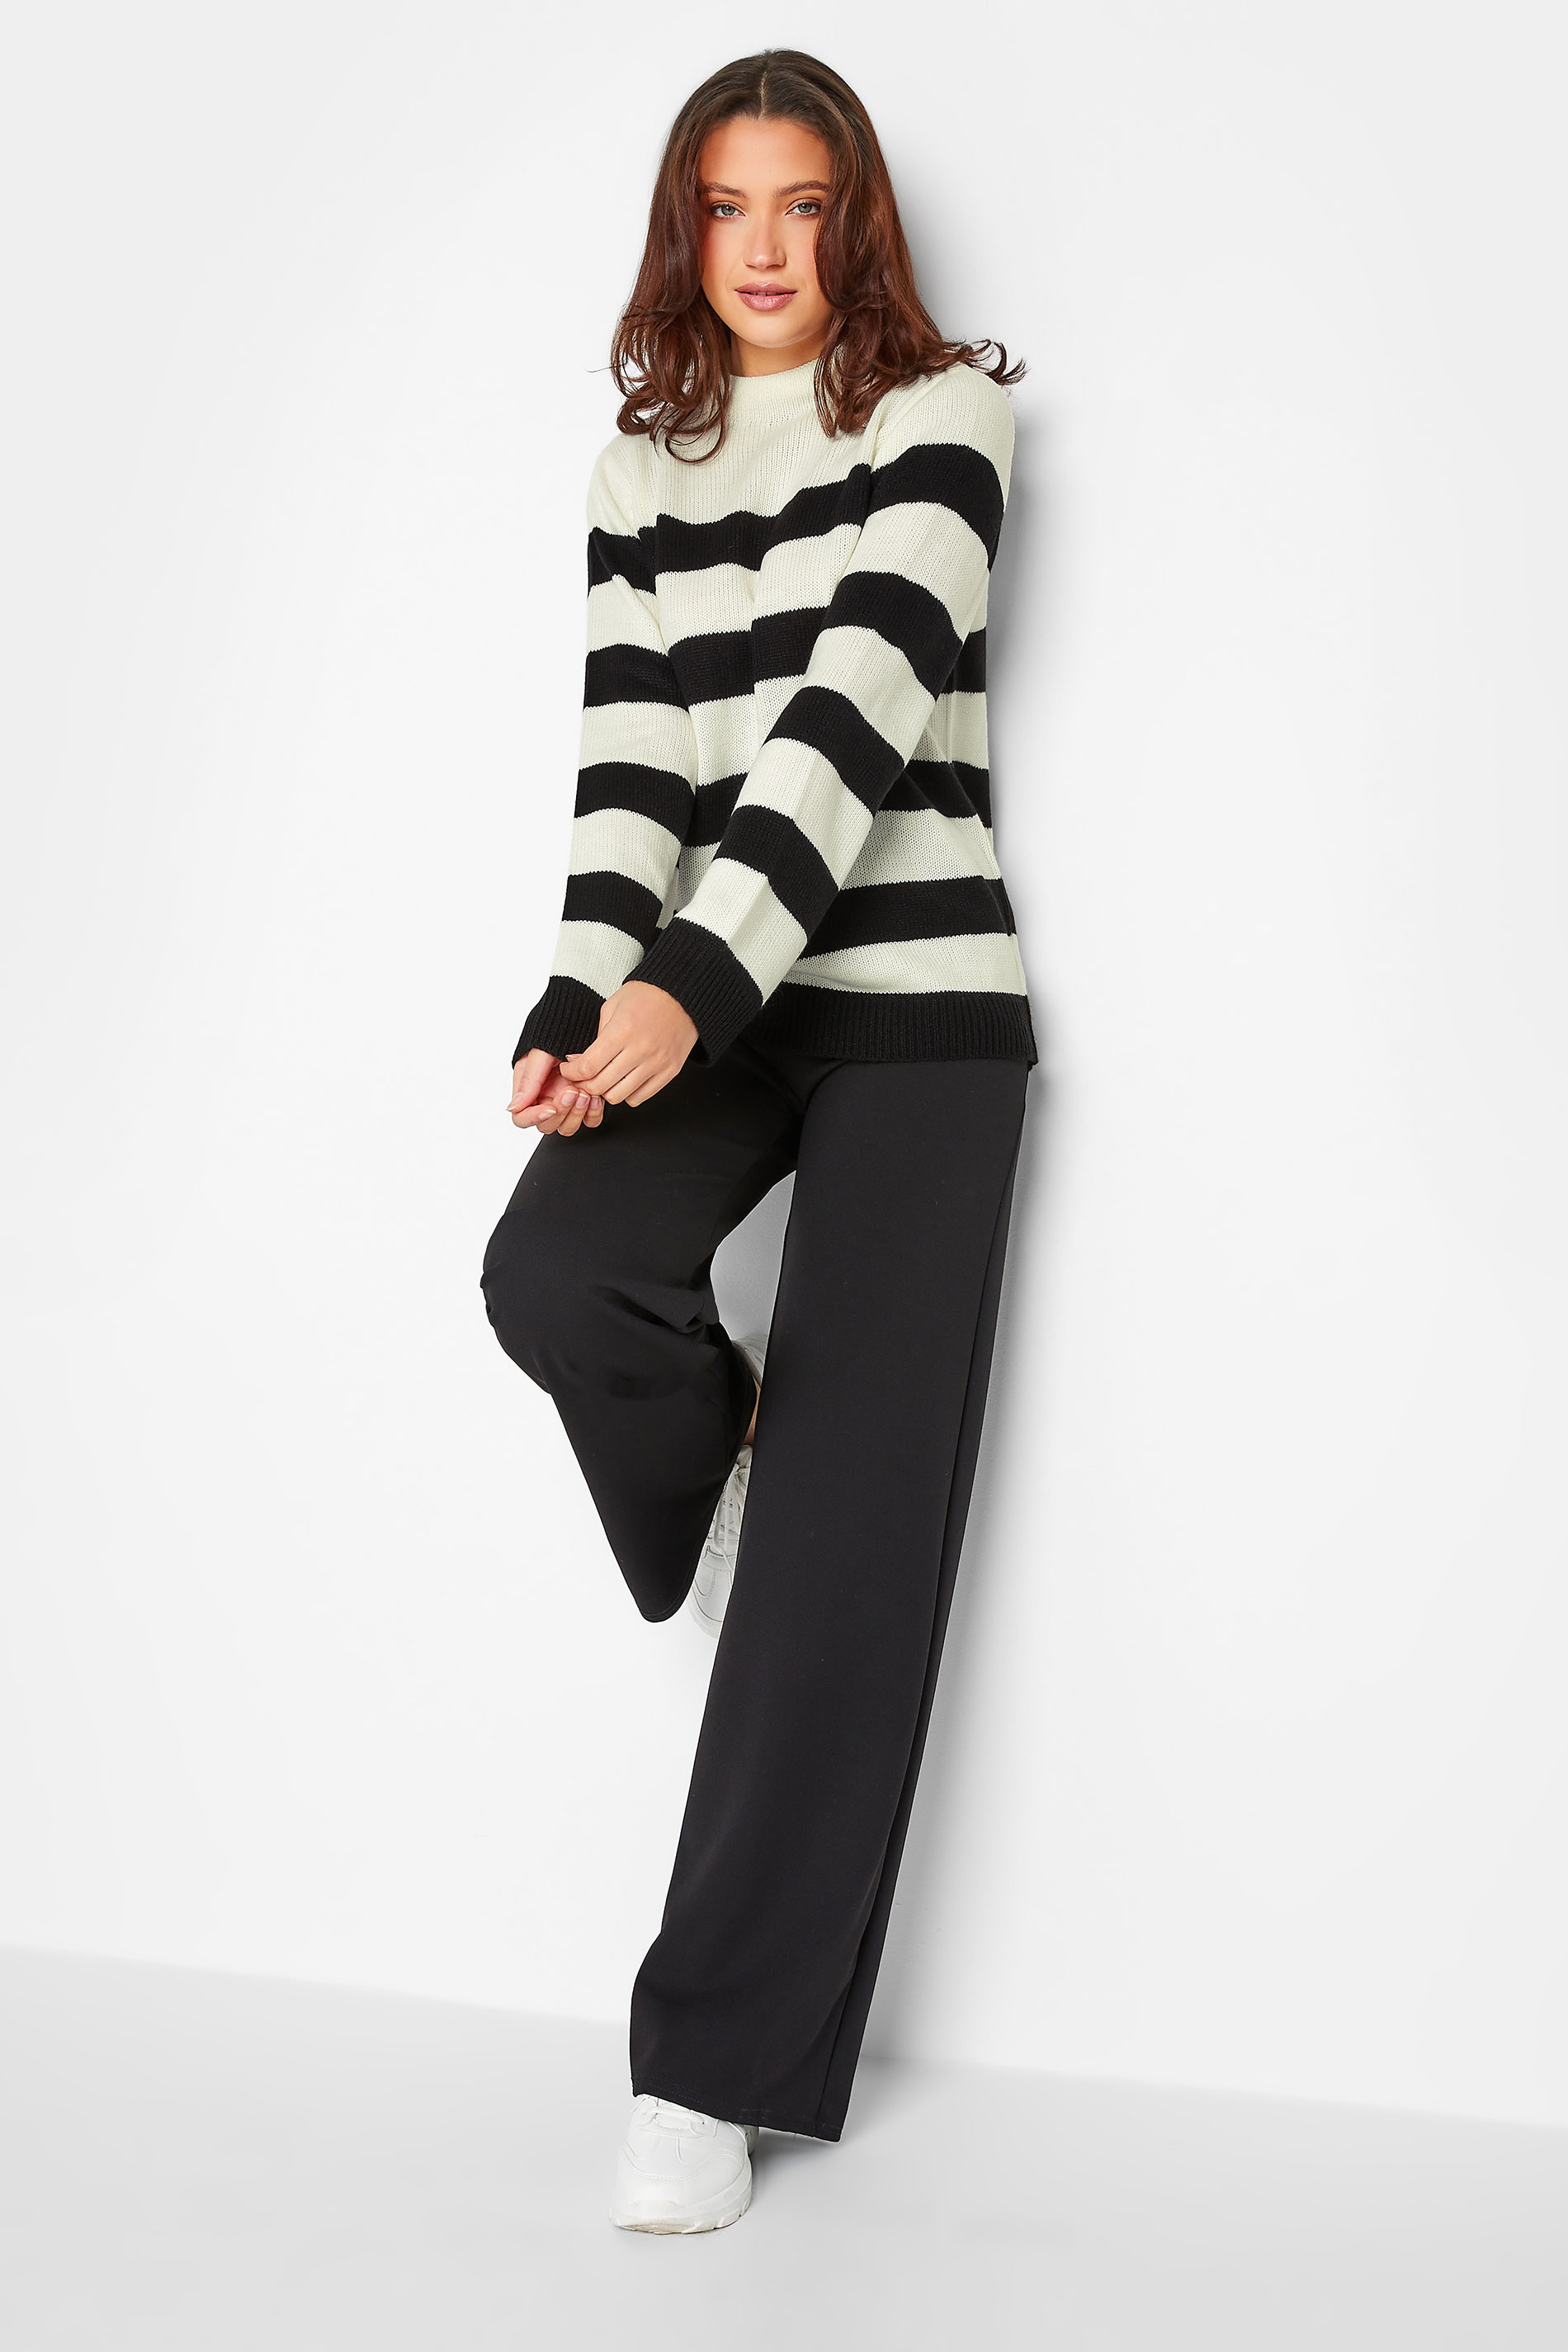 LTS Tall Women's Black & White Stripe Funnel Neck Jumper | Long Tall Sally 2